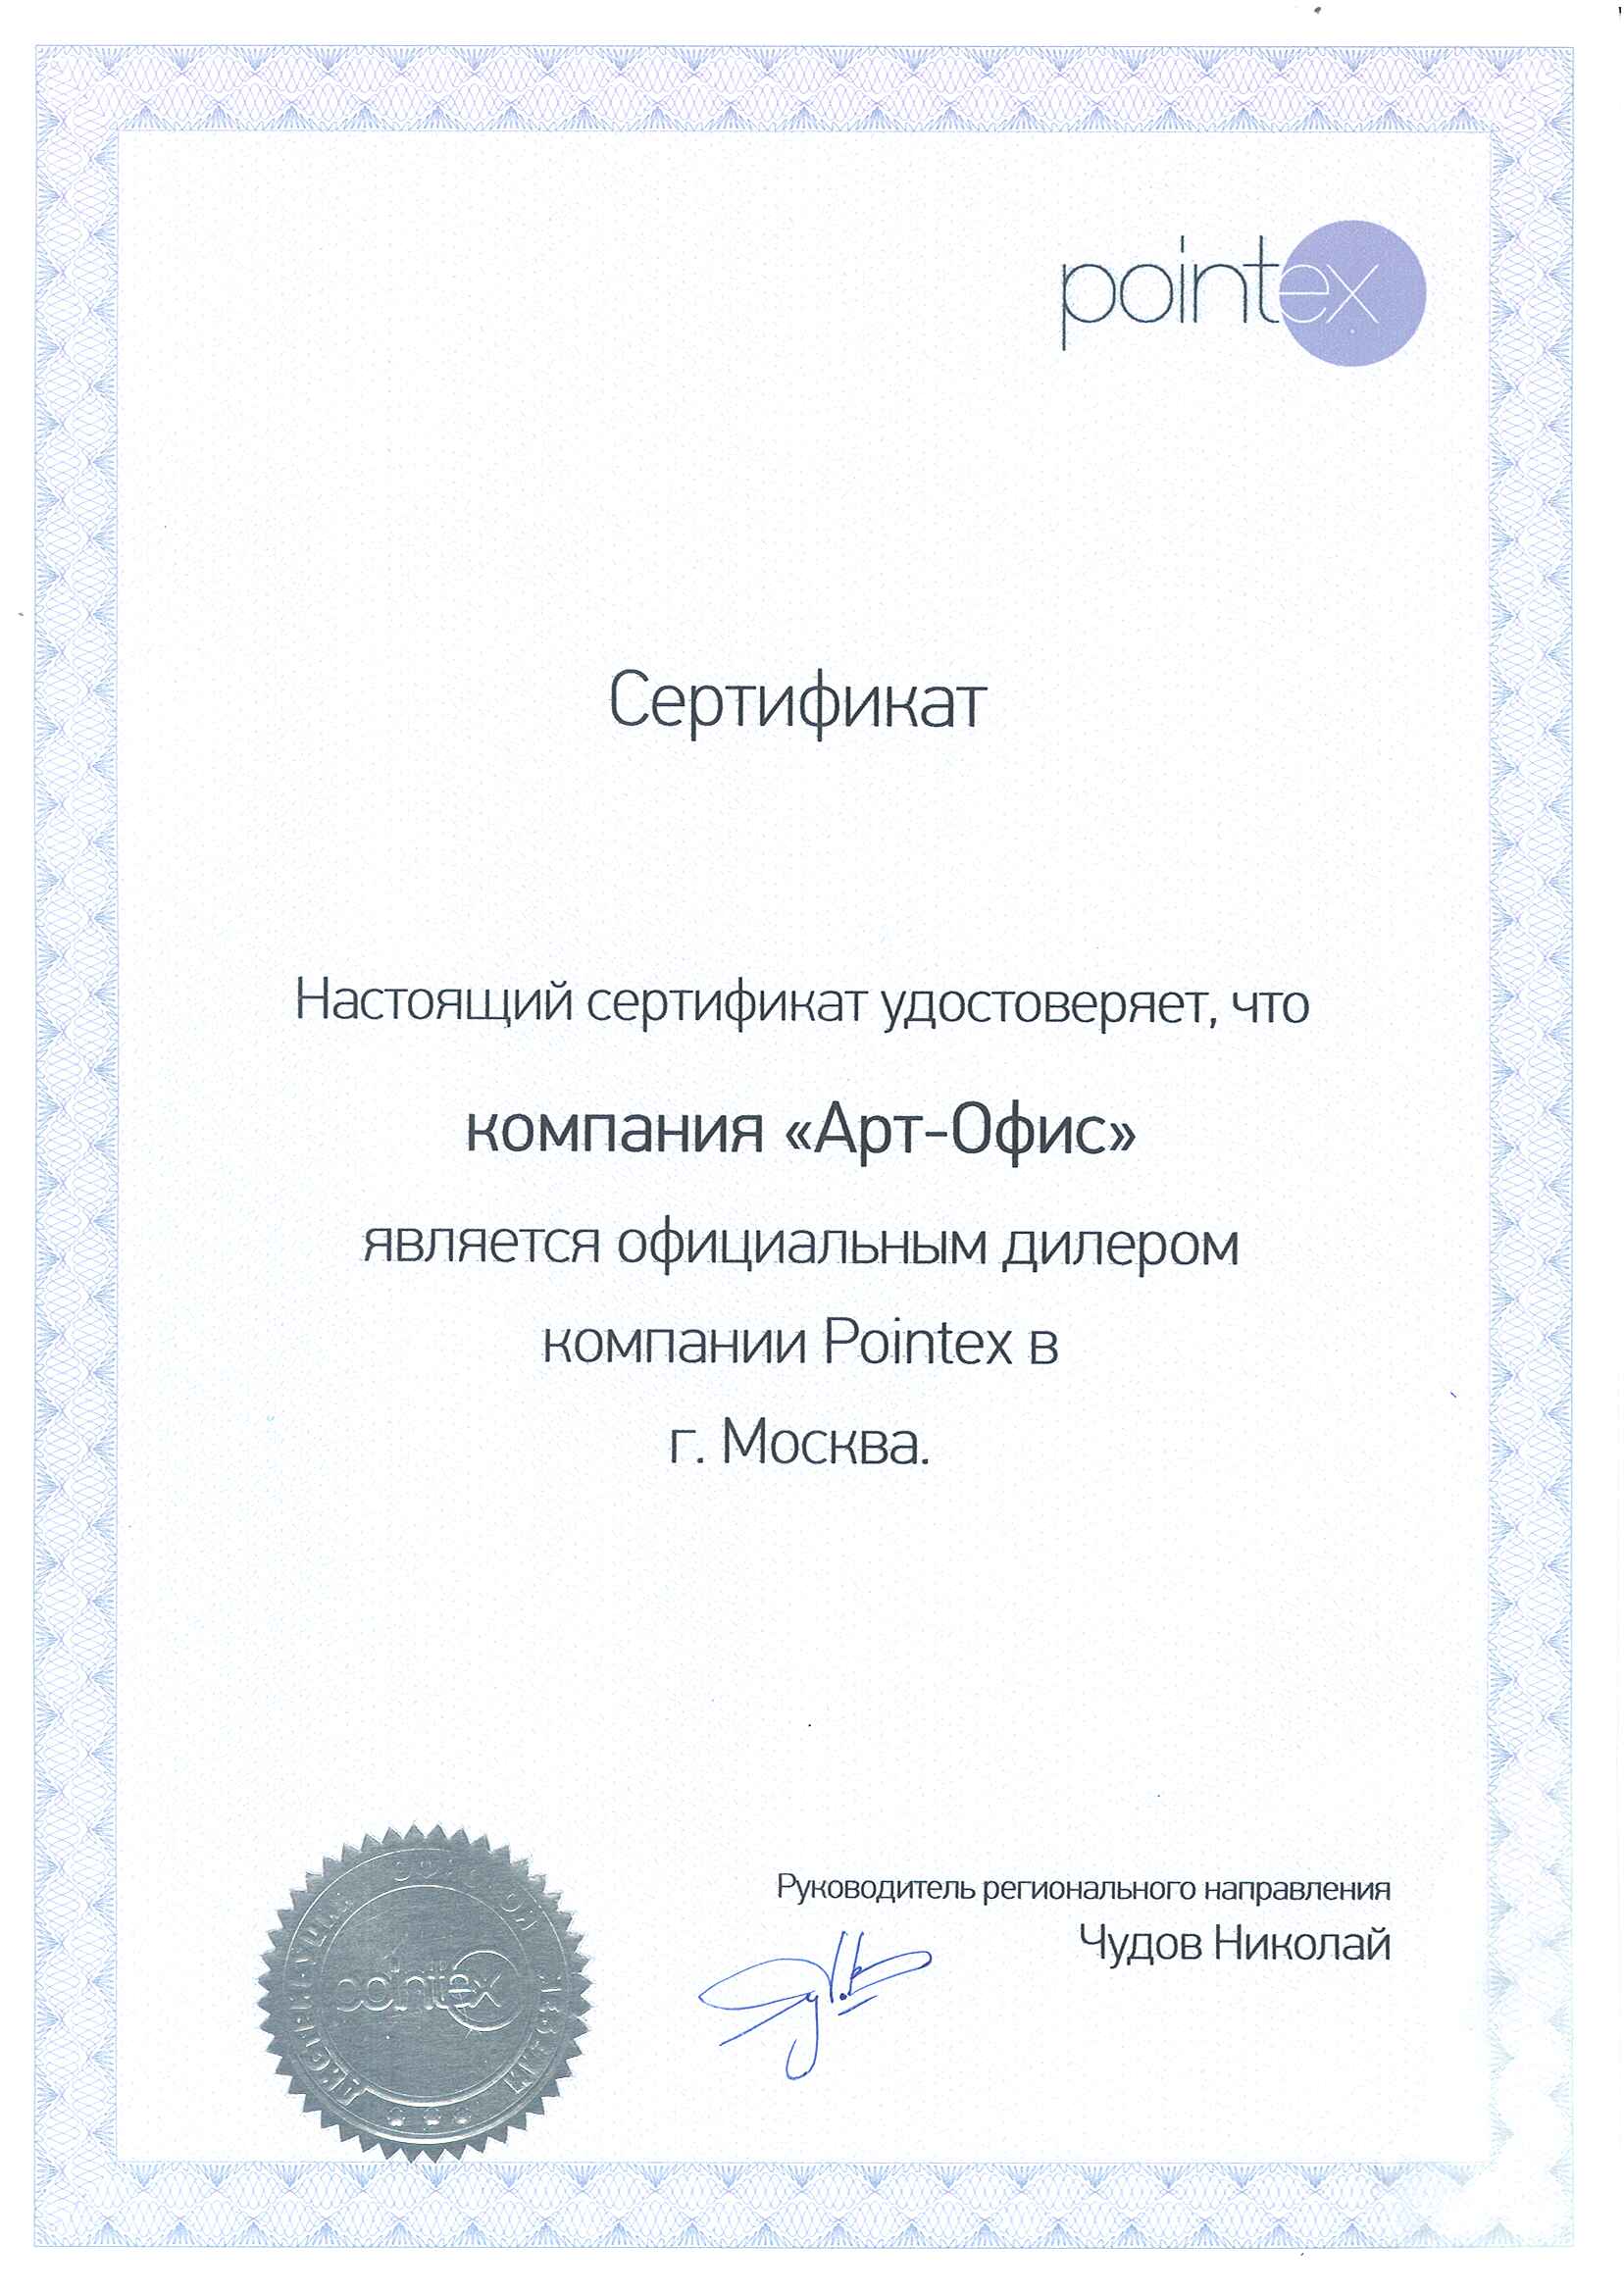 Сертификат от компании "Pointex"